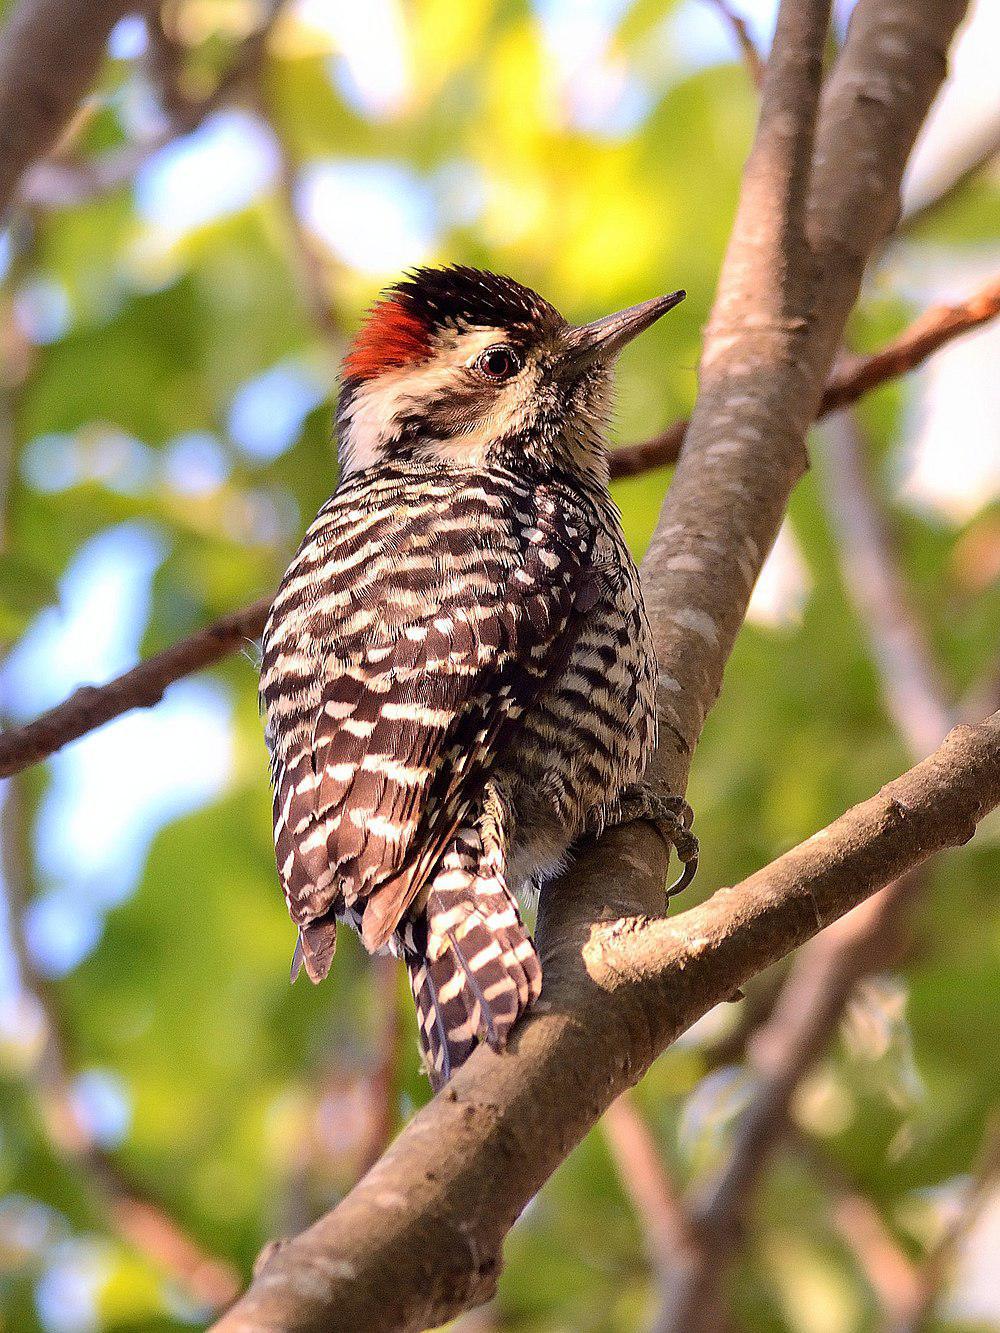 条纹啄木鸟 / Striped Woodpecker / Veniliornis lignarius